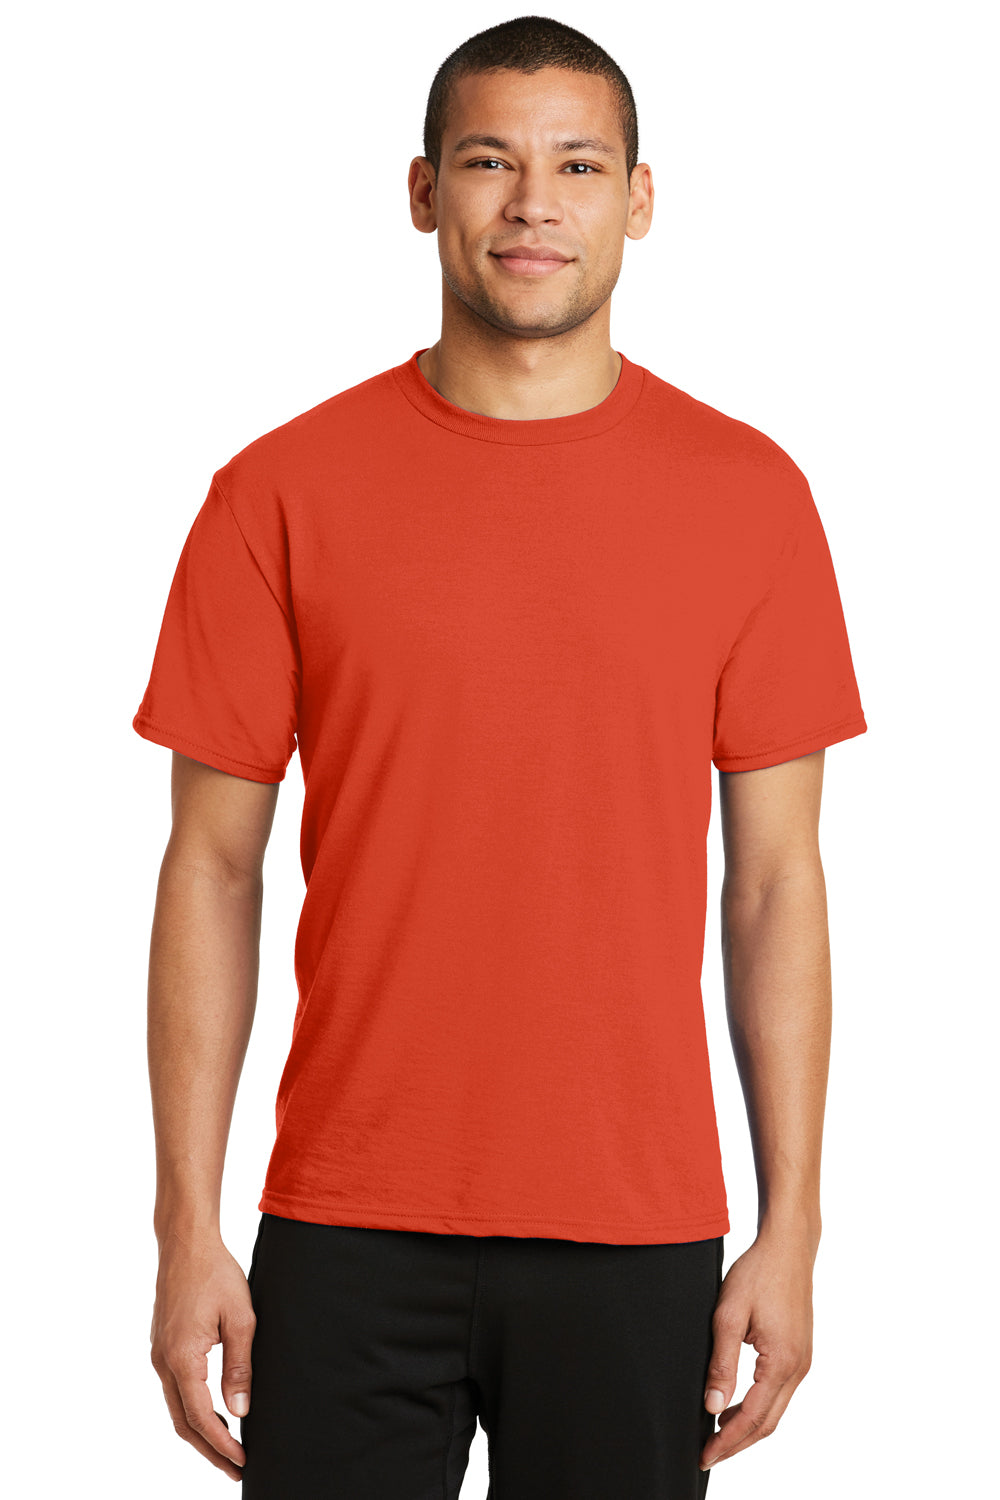 Port & Company PC381 Mens Dry Zone Performance Moisture Wicking Short Sleeve Crewneck T-Shirt Orange Front